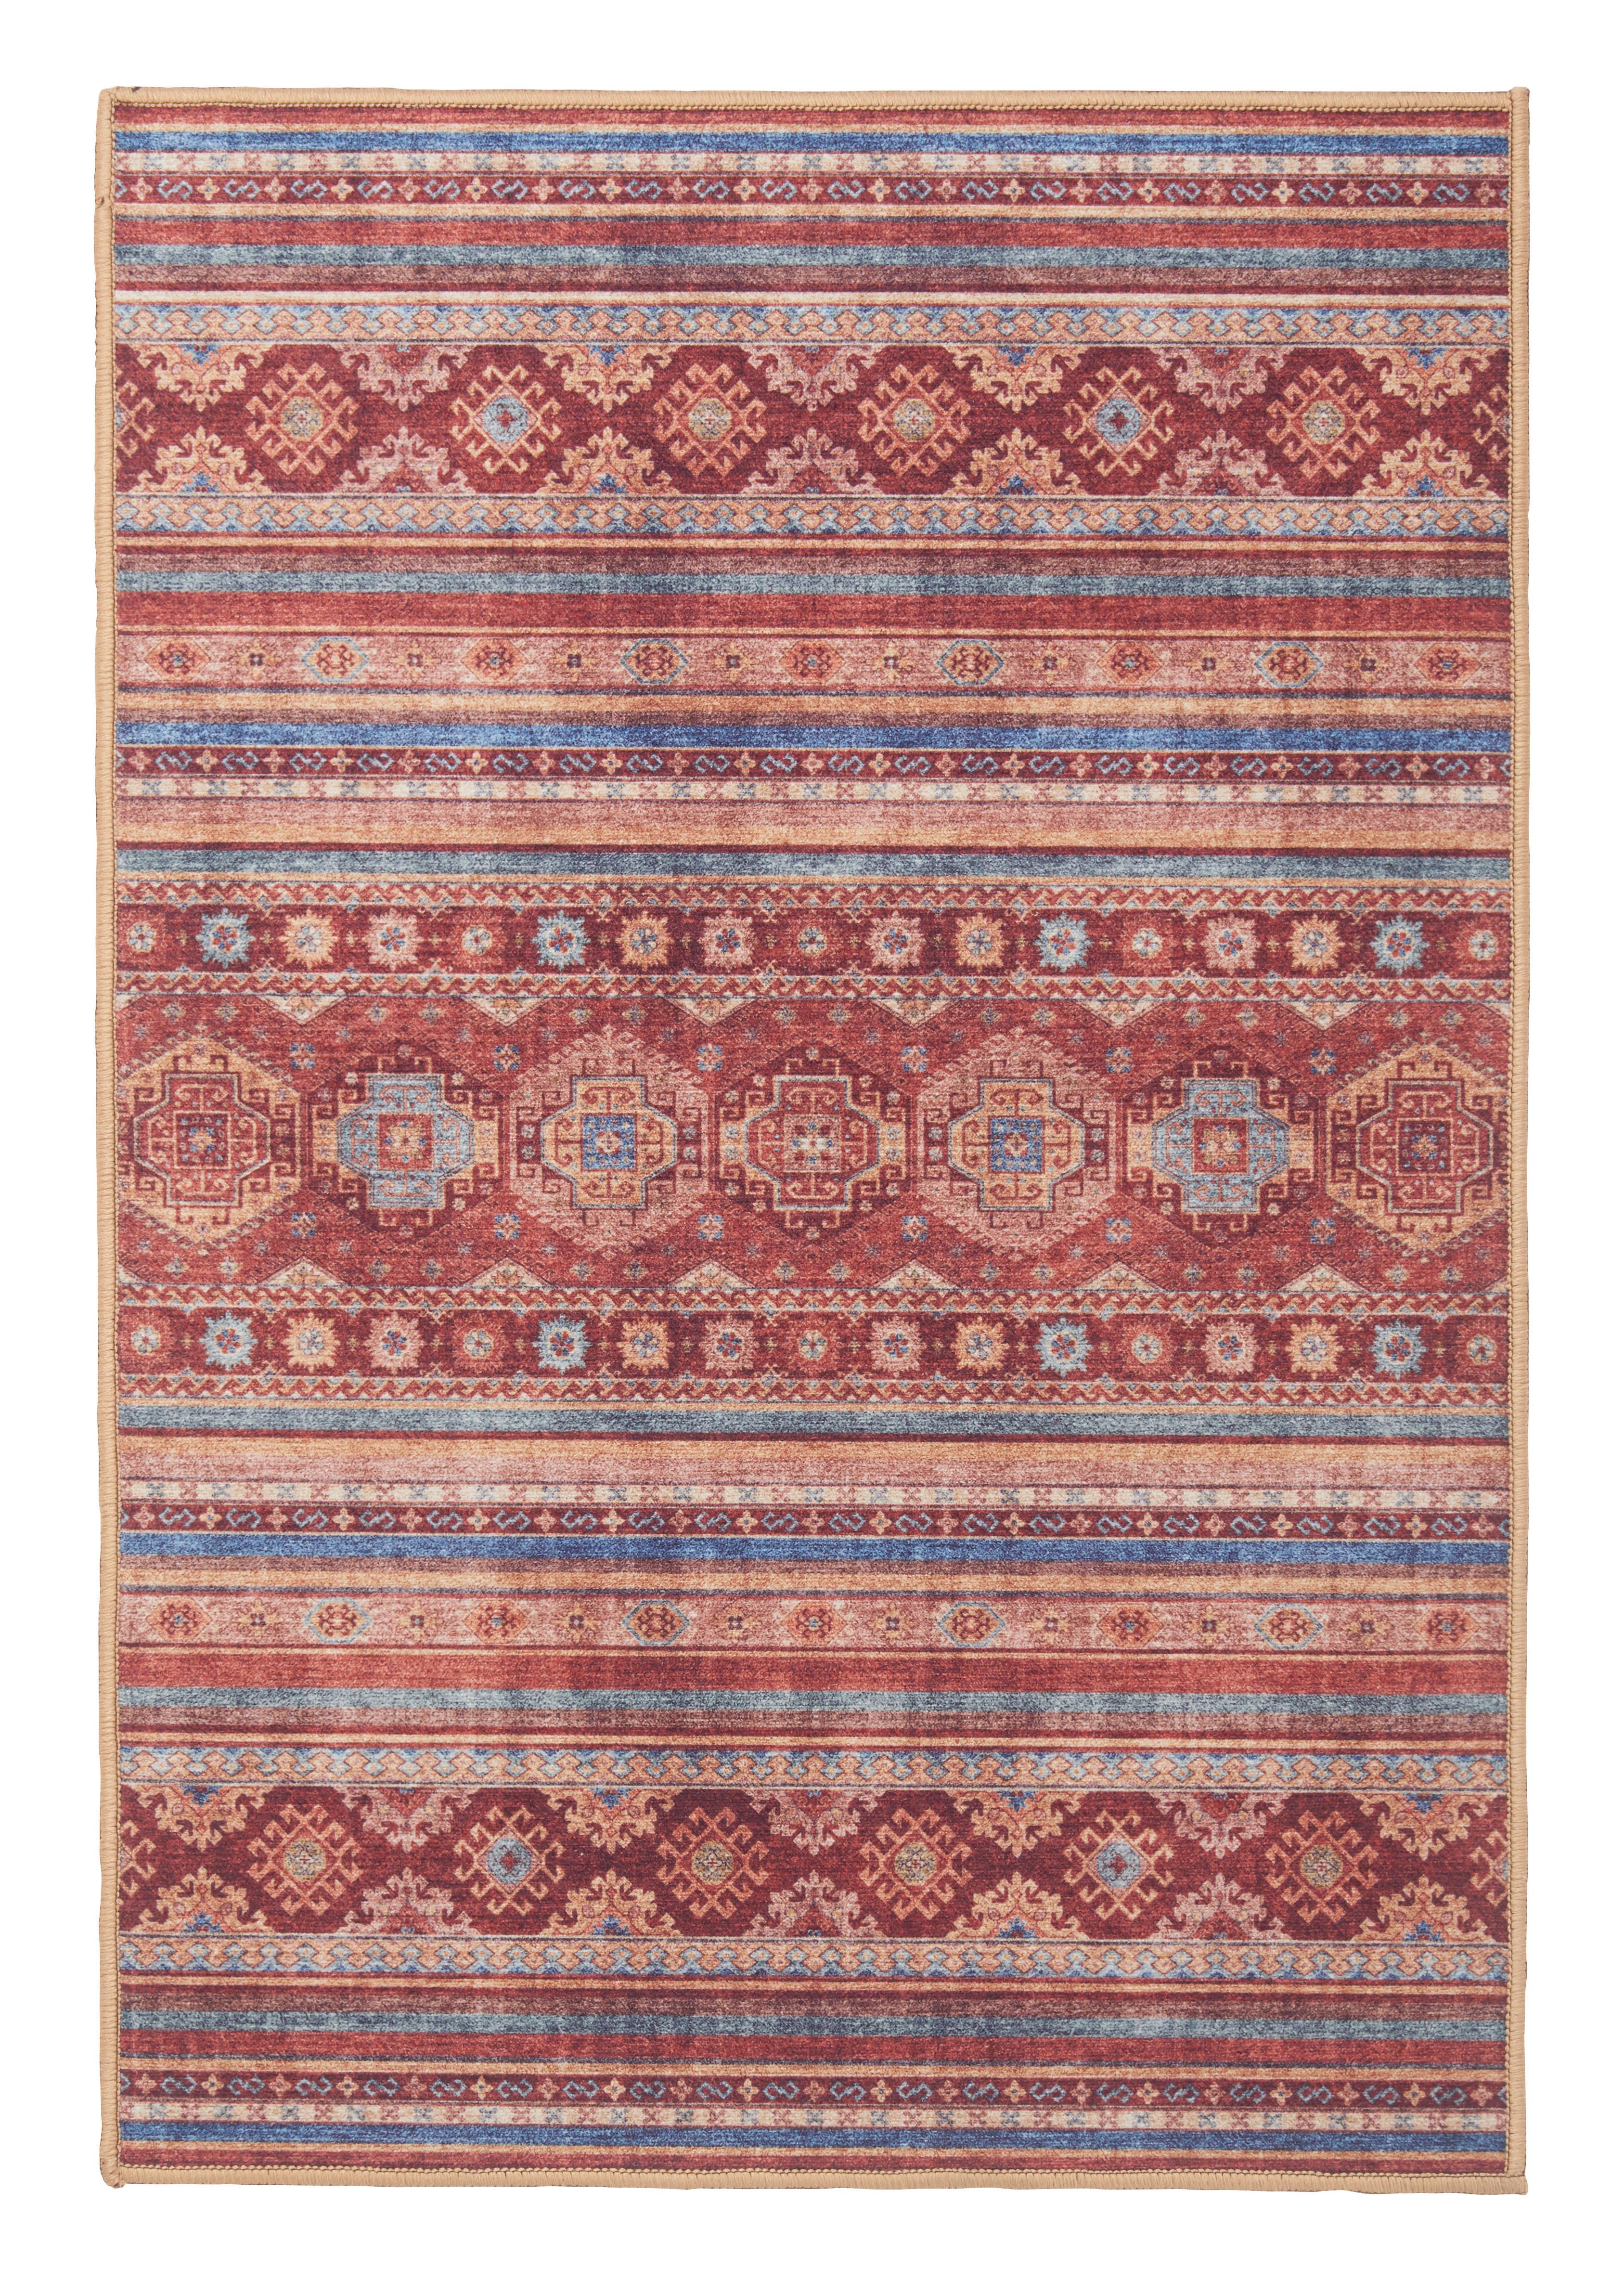 Webteppich Israel 1 in Terra ca. 60x90cm - Terra cotta, Textil (60/90cm) - Modern Living